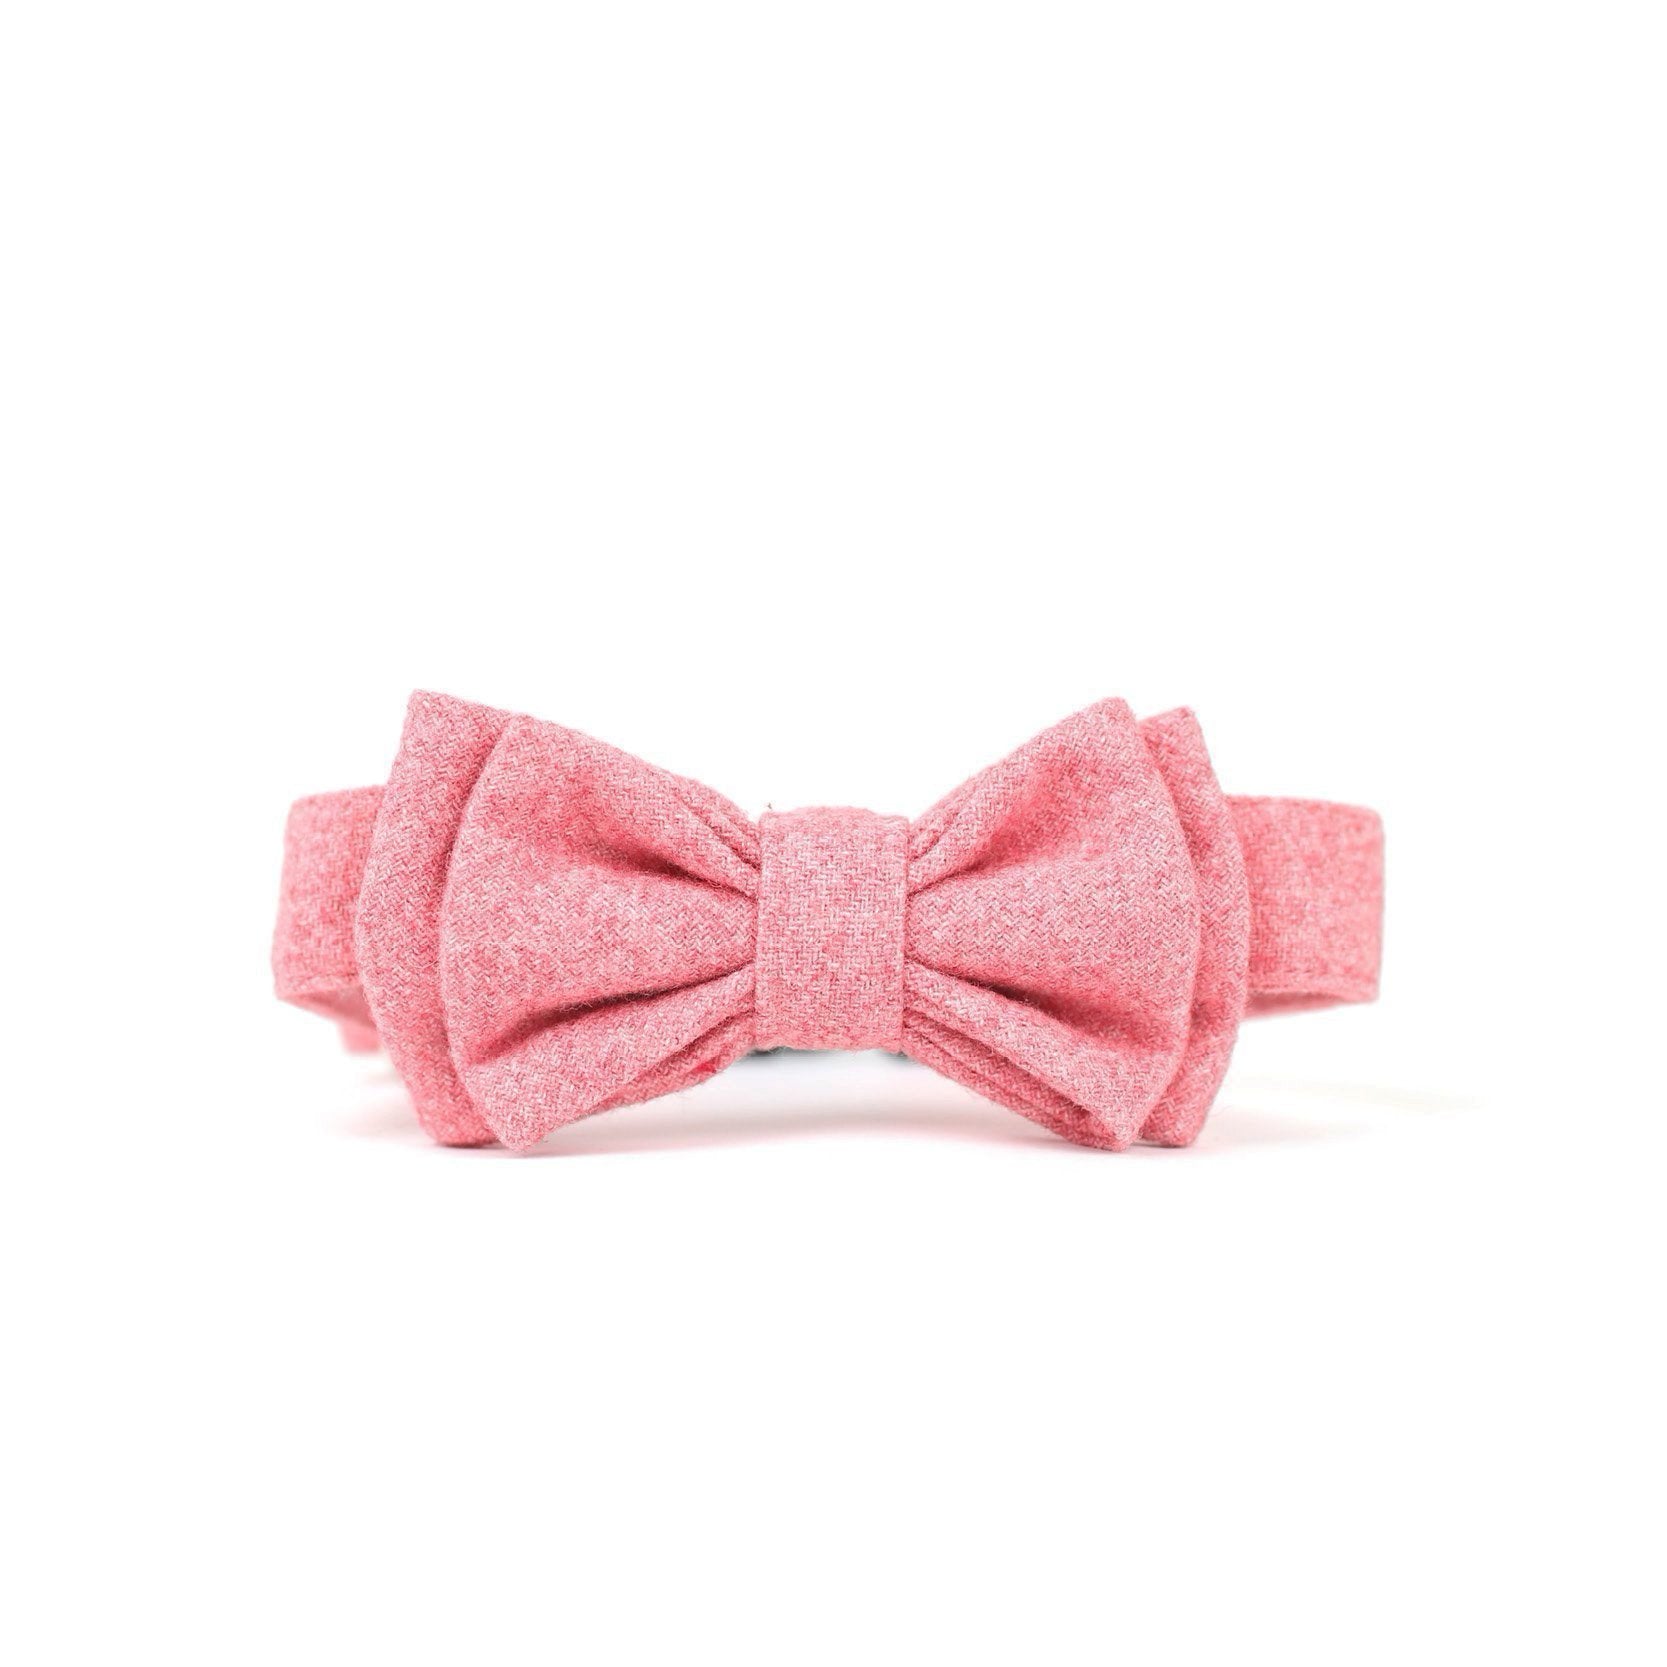 Barkholic Pink Bow Tie